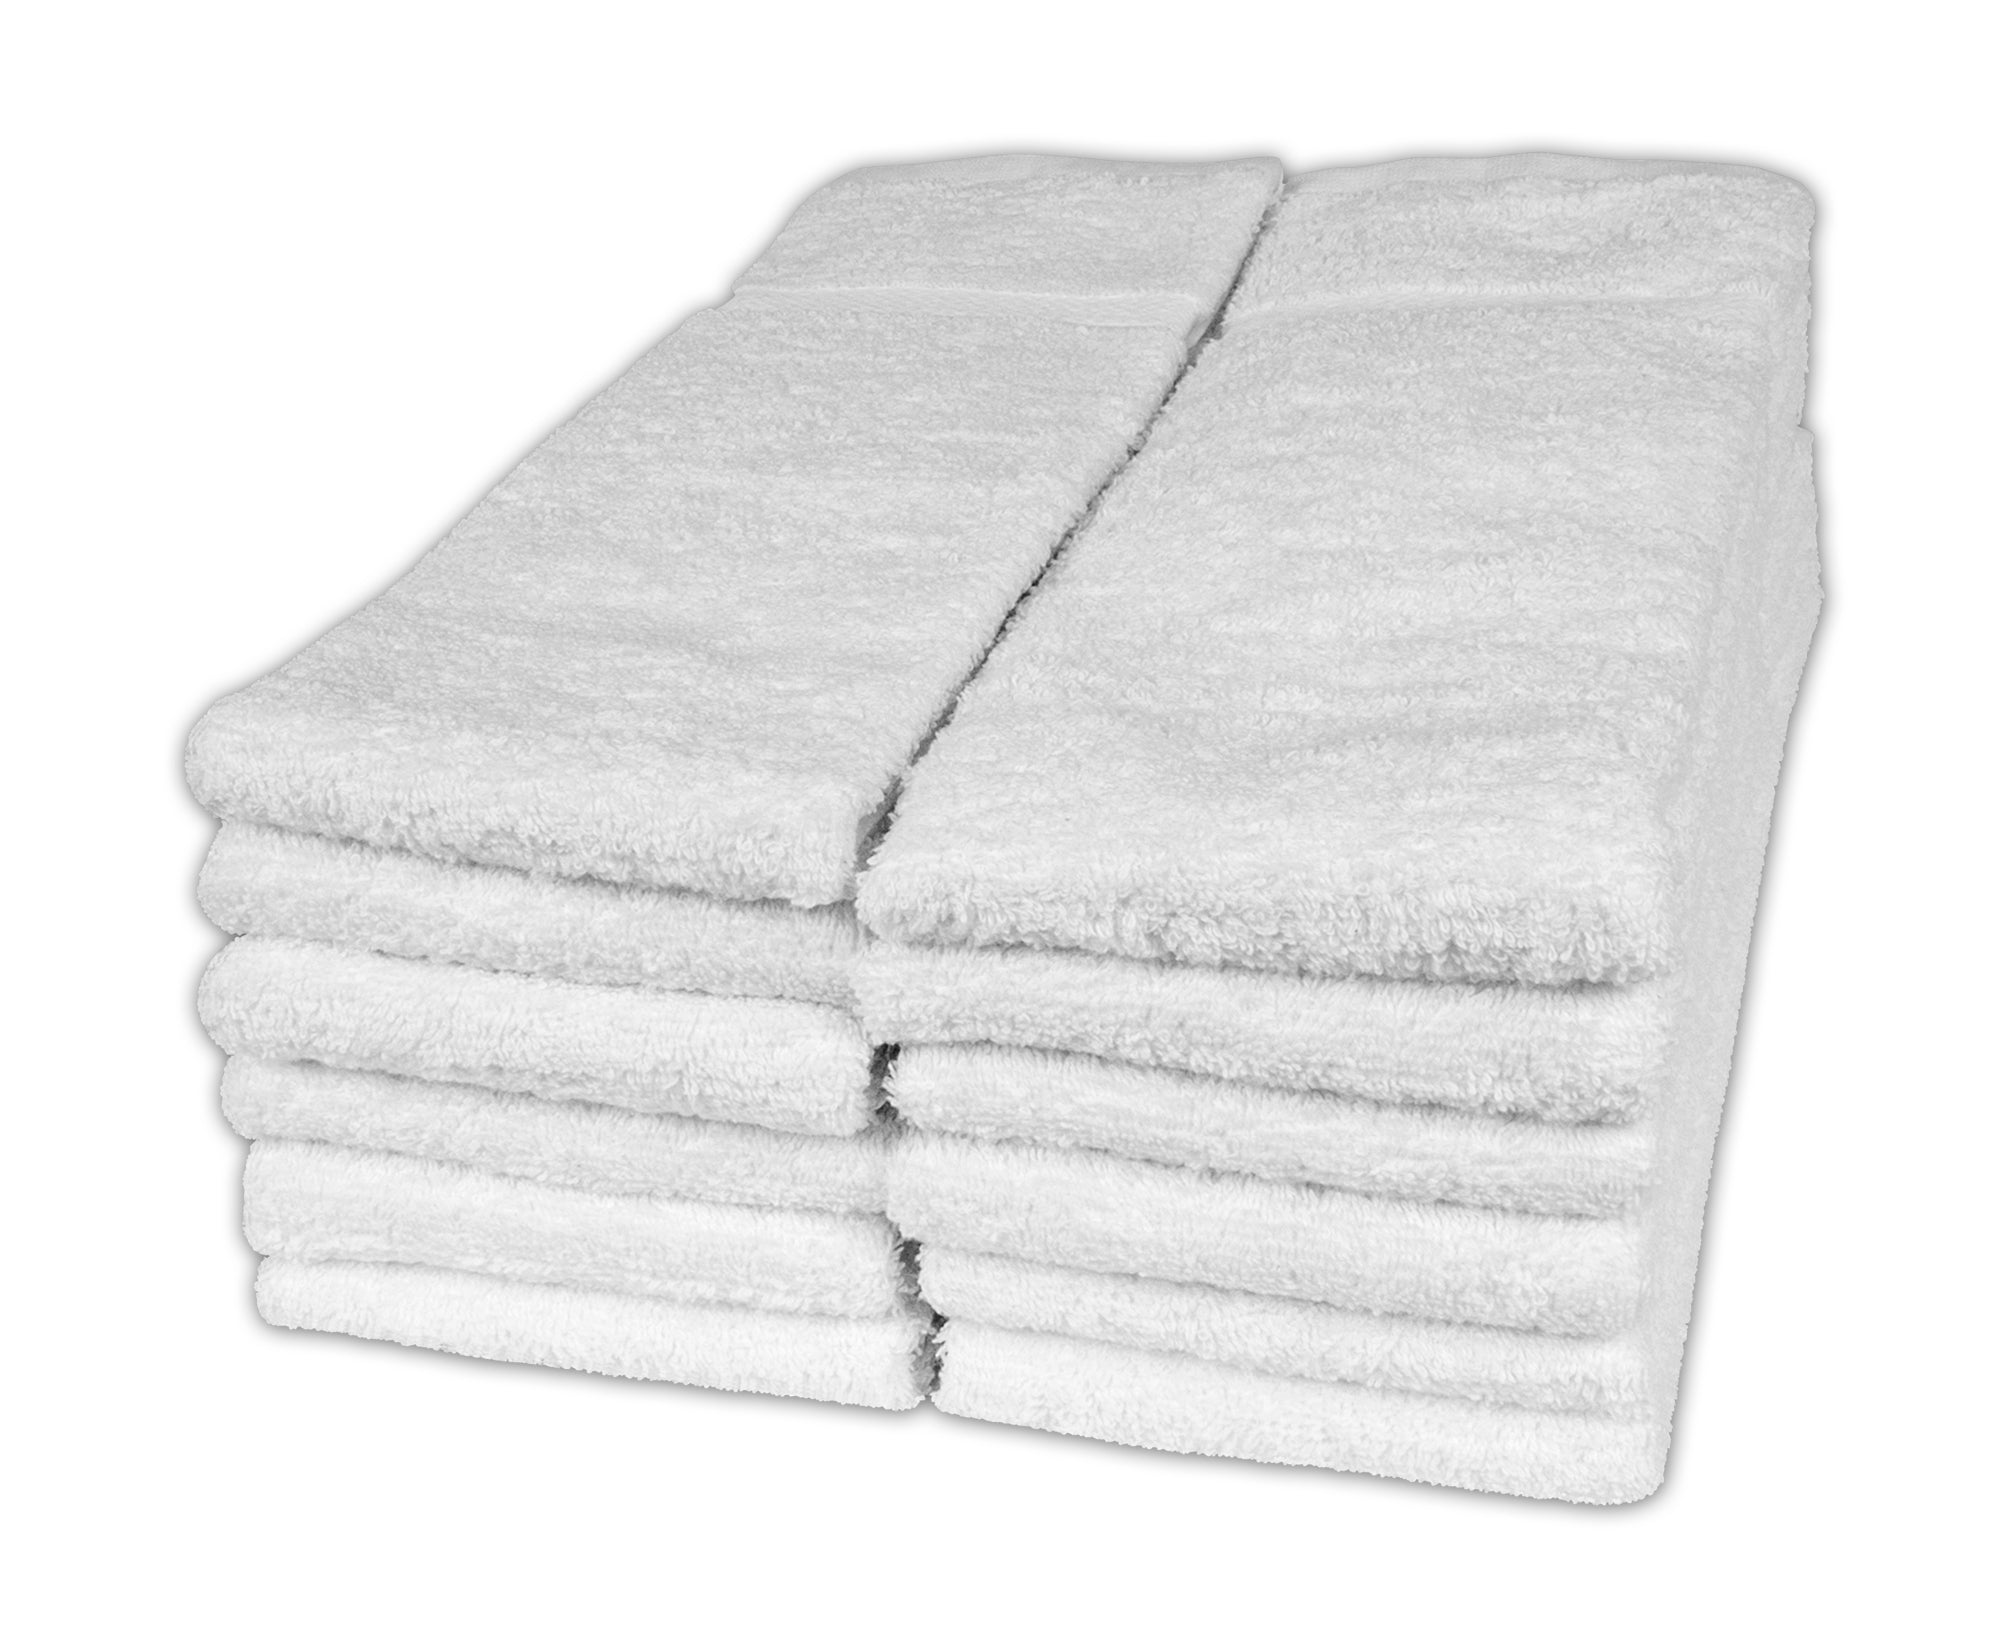 12 PIECE LUSH VELOUR WHITE HAND TOWELS 16 X 27 –